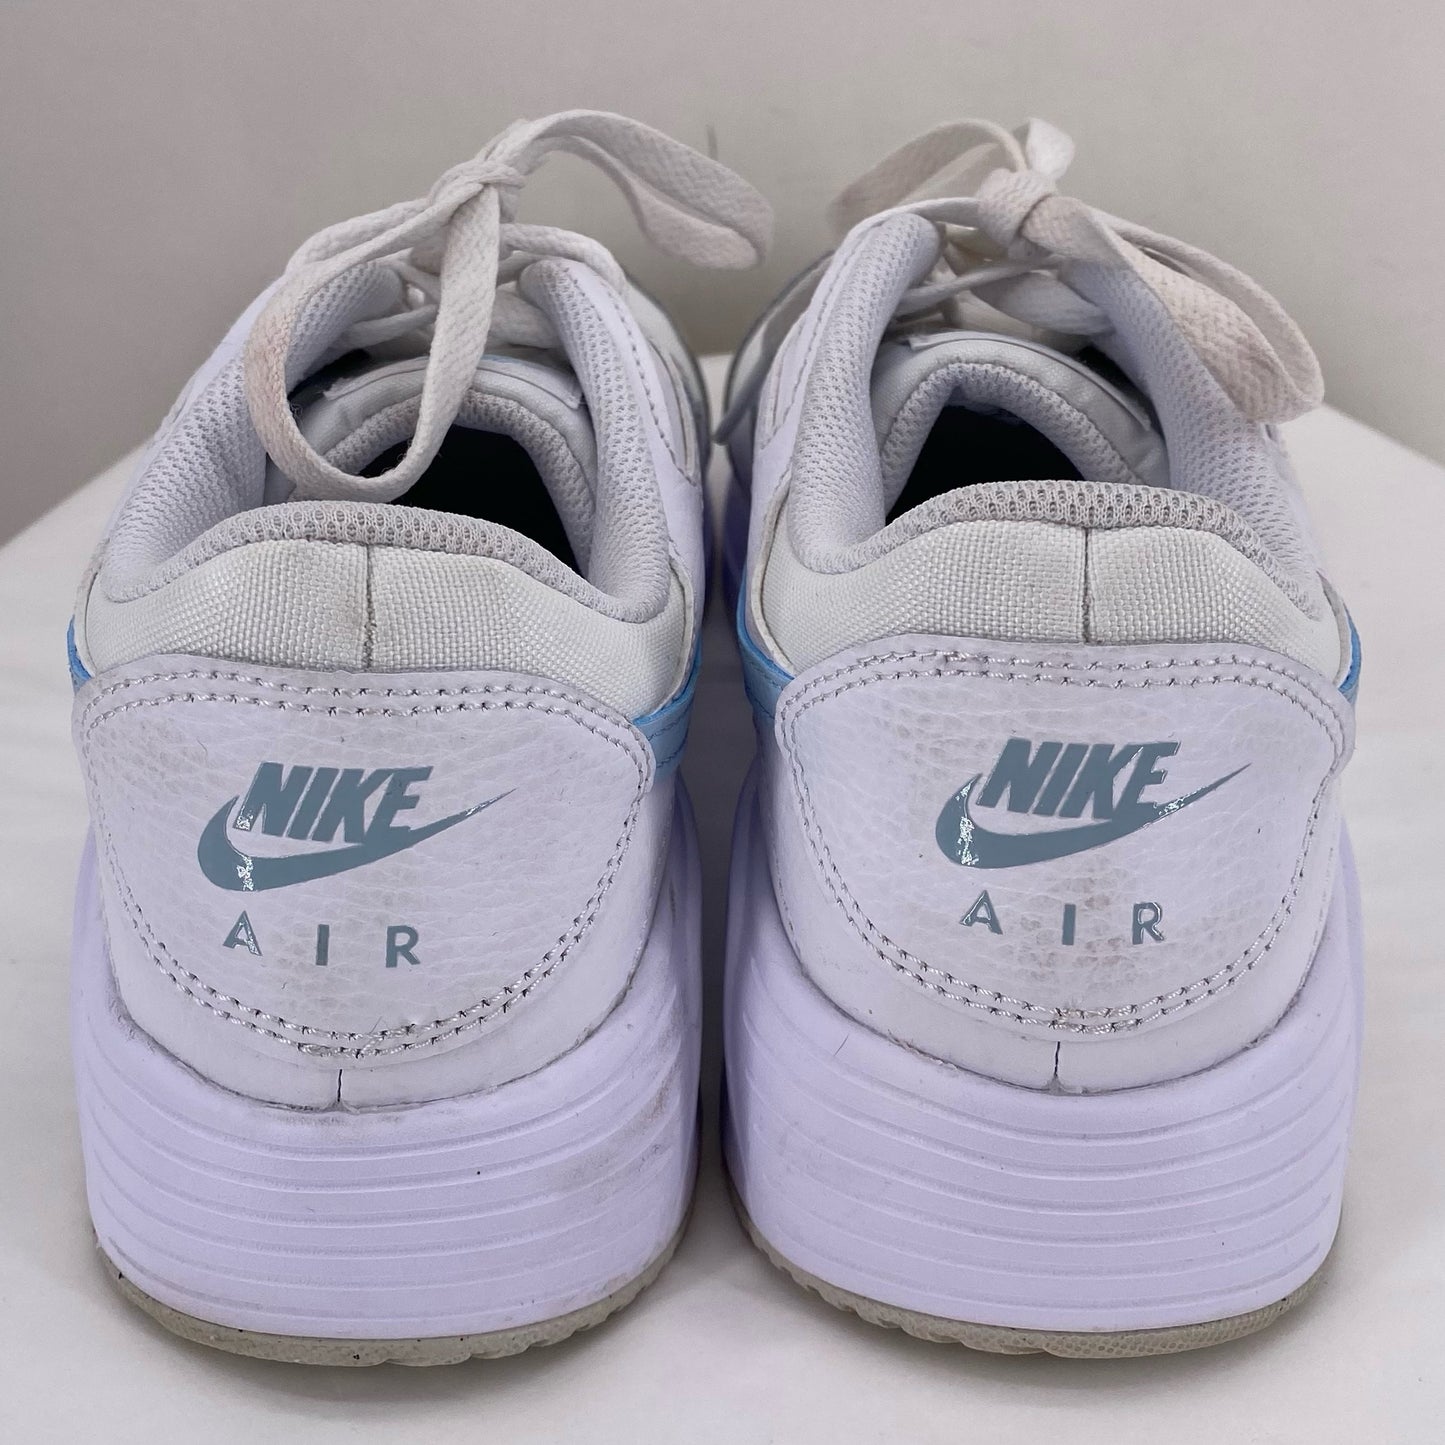 White W Shoe Size 11 NIKE Sneakers